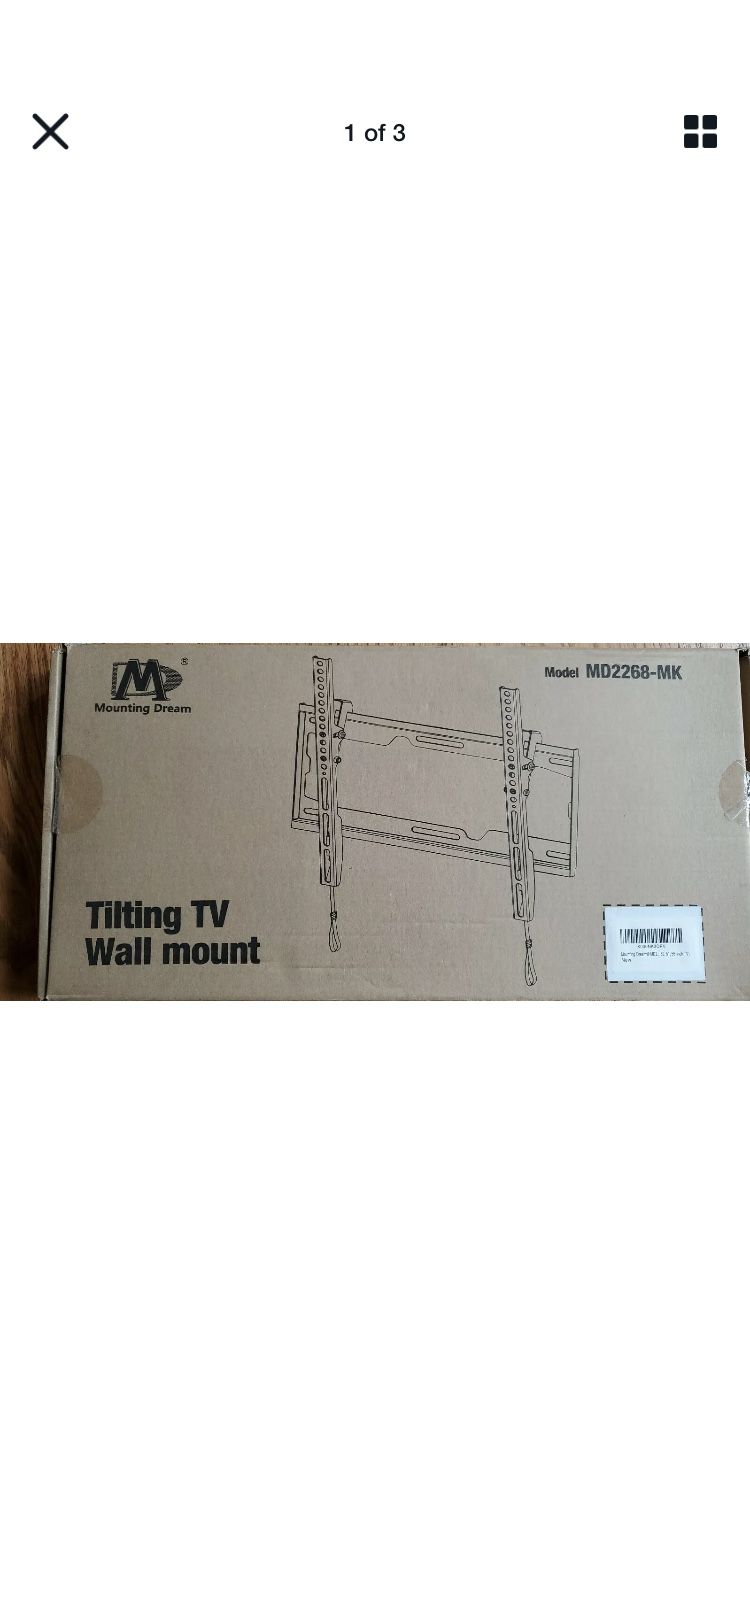 Mounting dream tv wall mount Model MD2268-MK 26-55 Inch TV Mounting Bracket